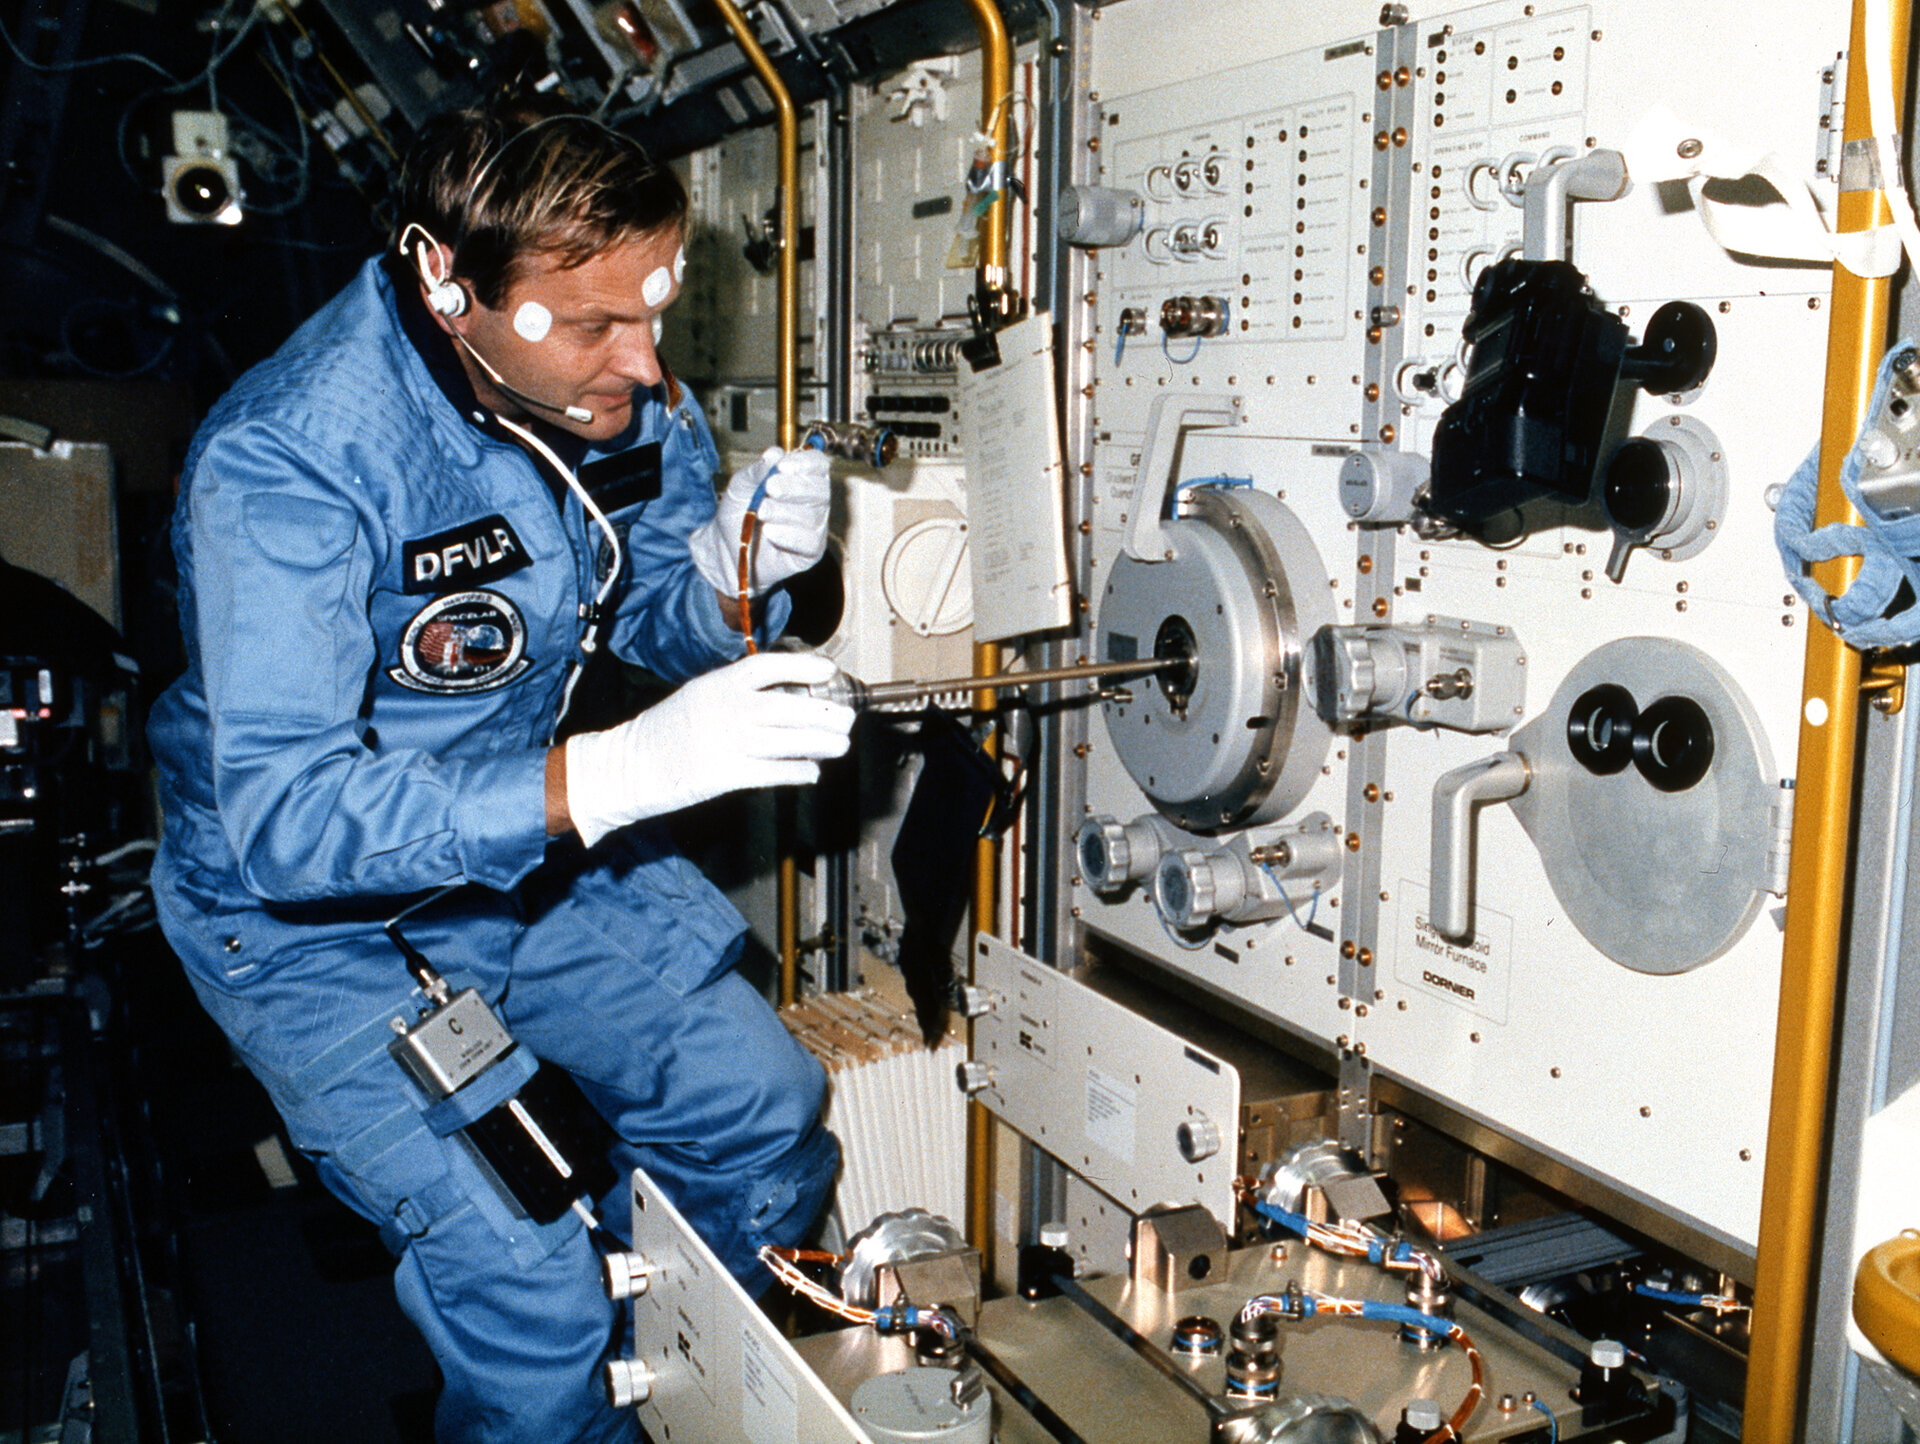 Messerschmid at work in Spacelab D1